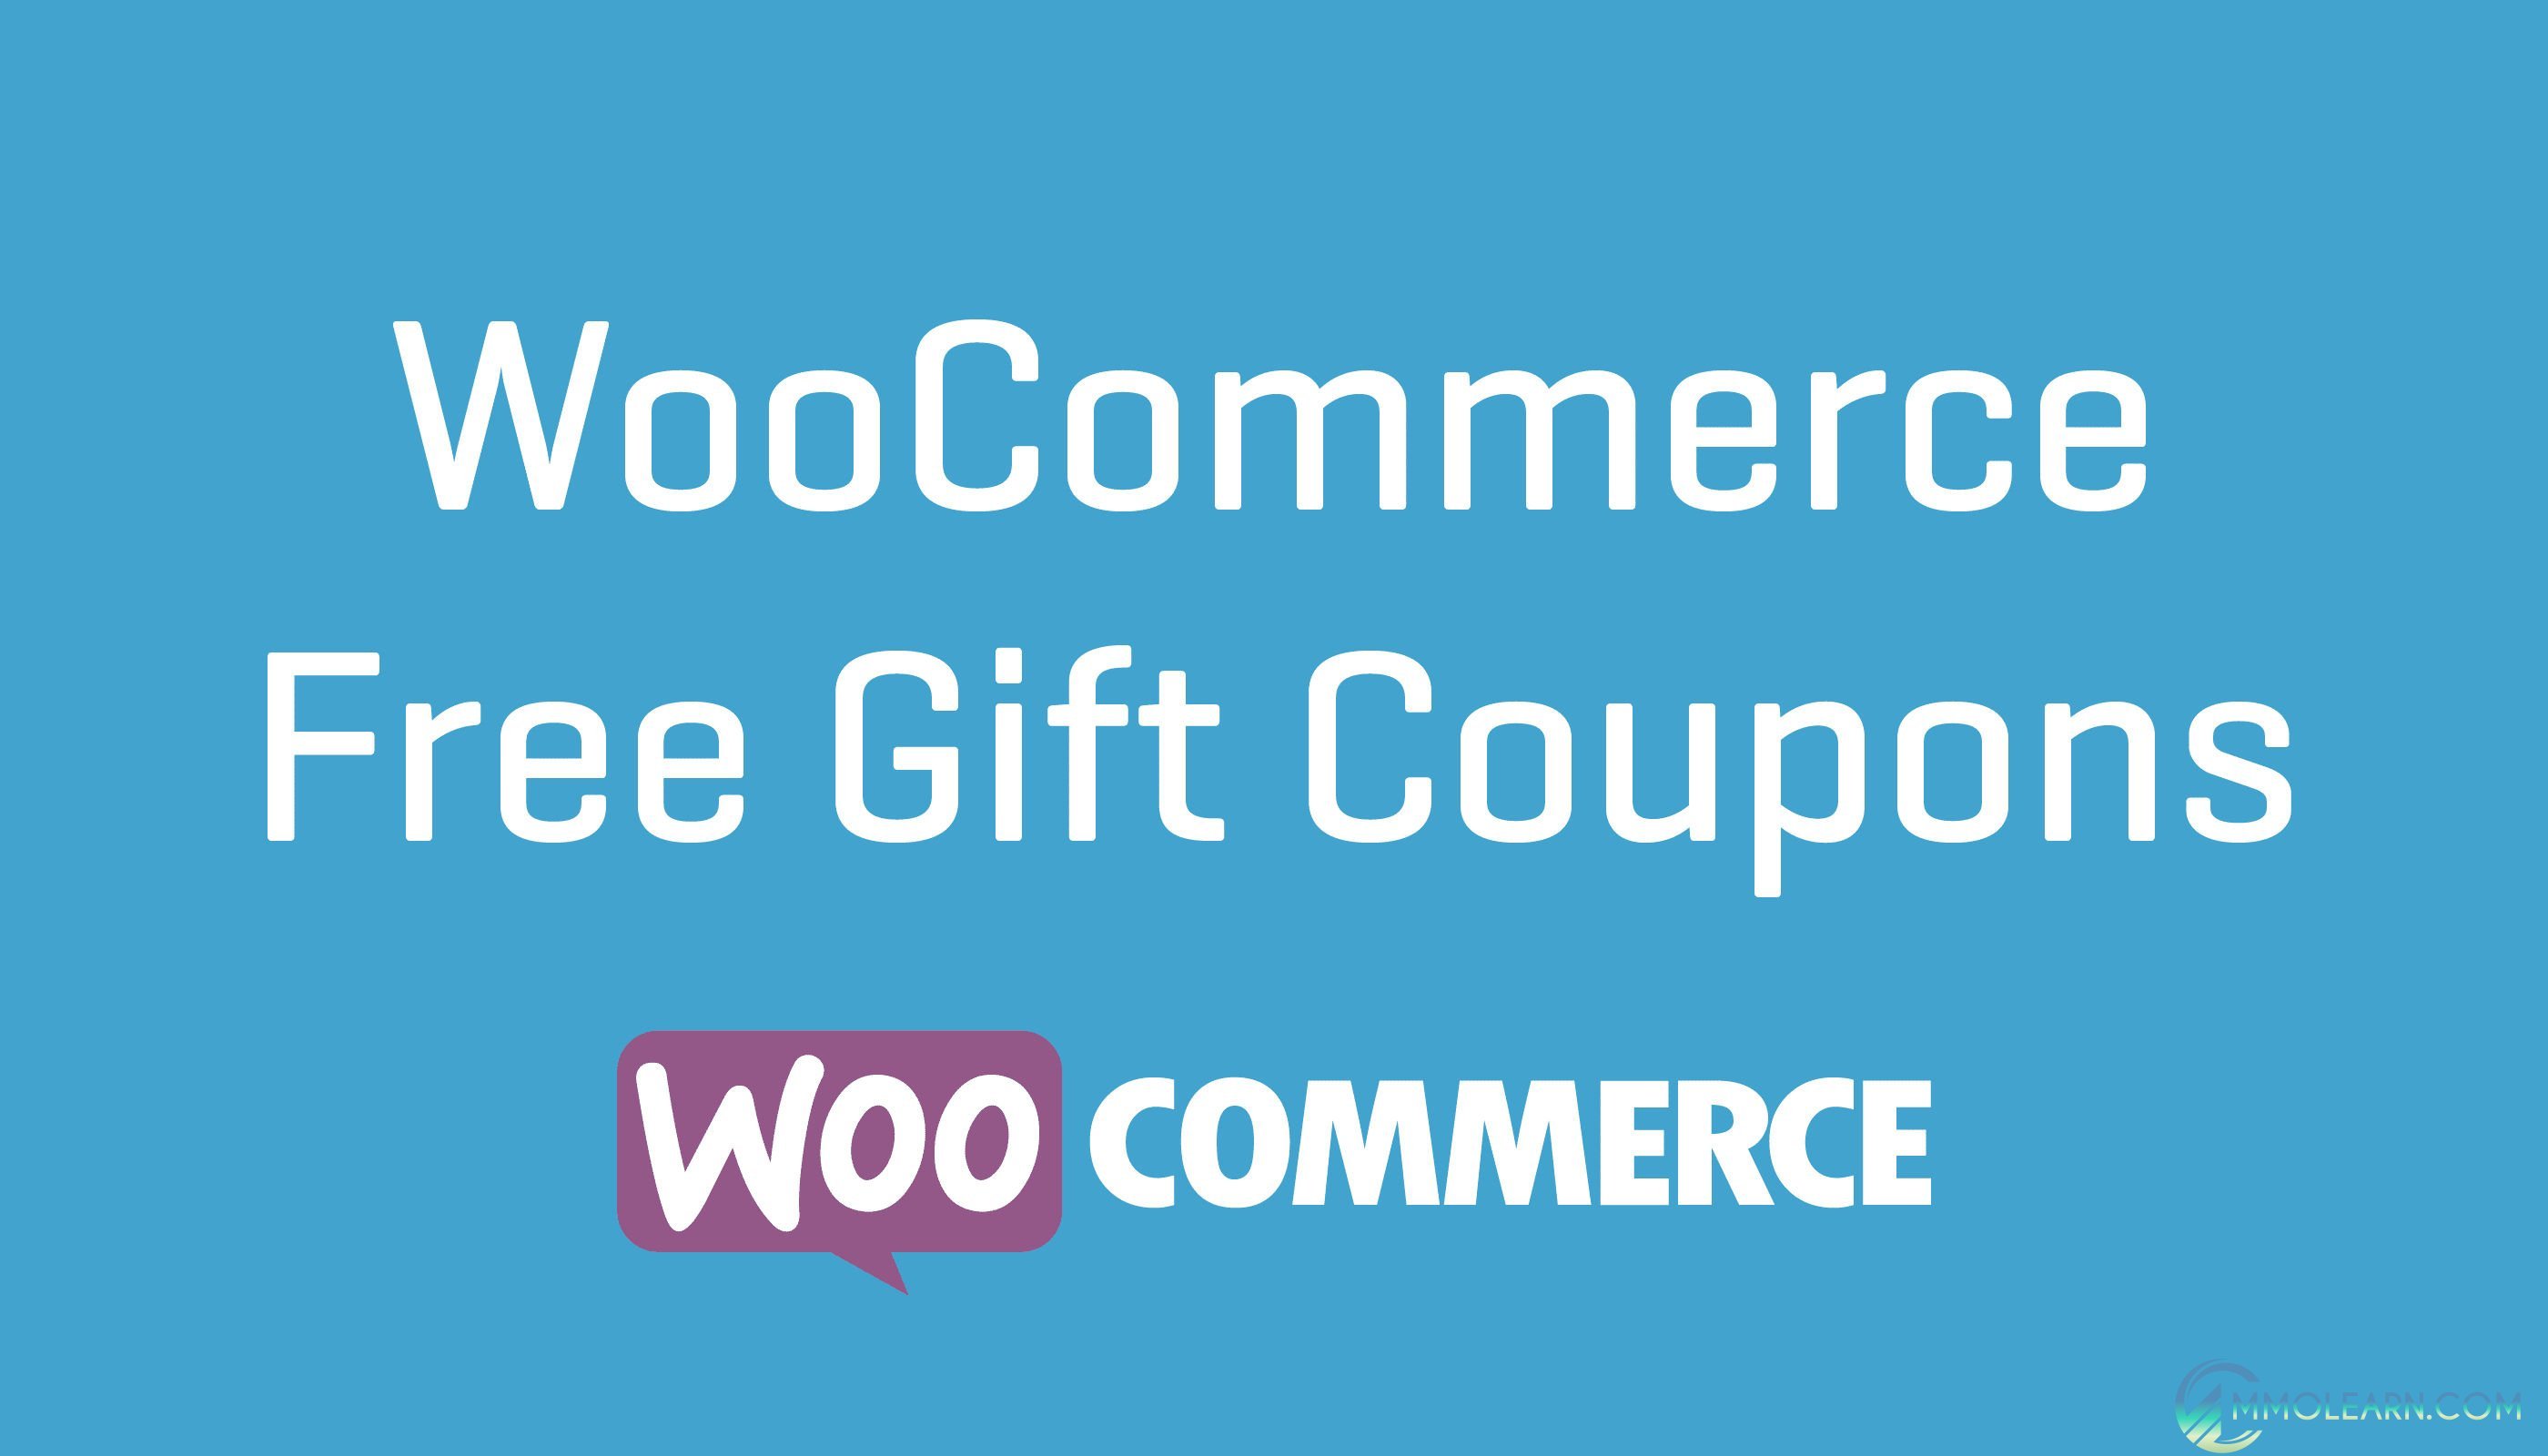 WooCommerce Free Gift Coupons.jpg